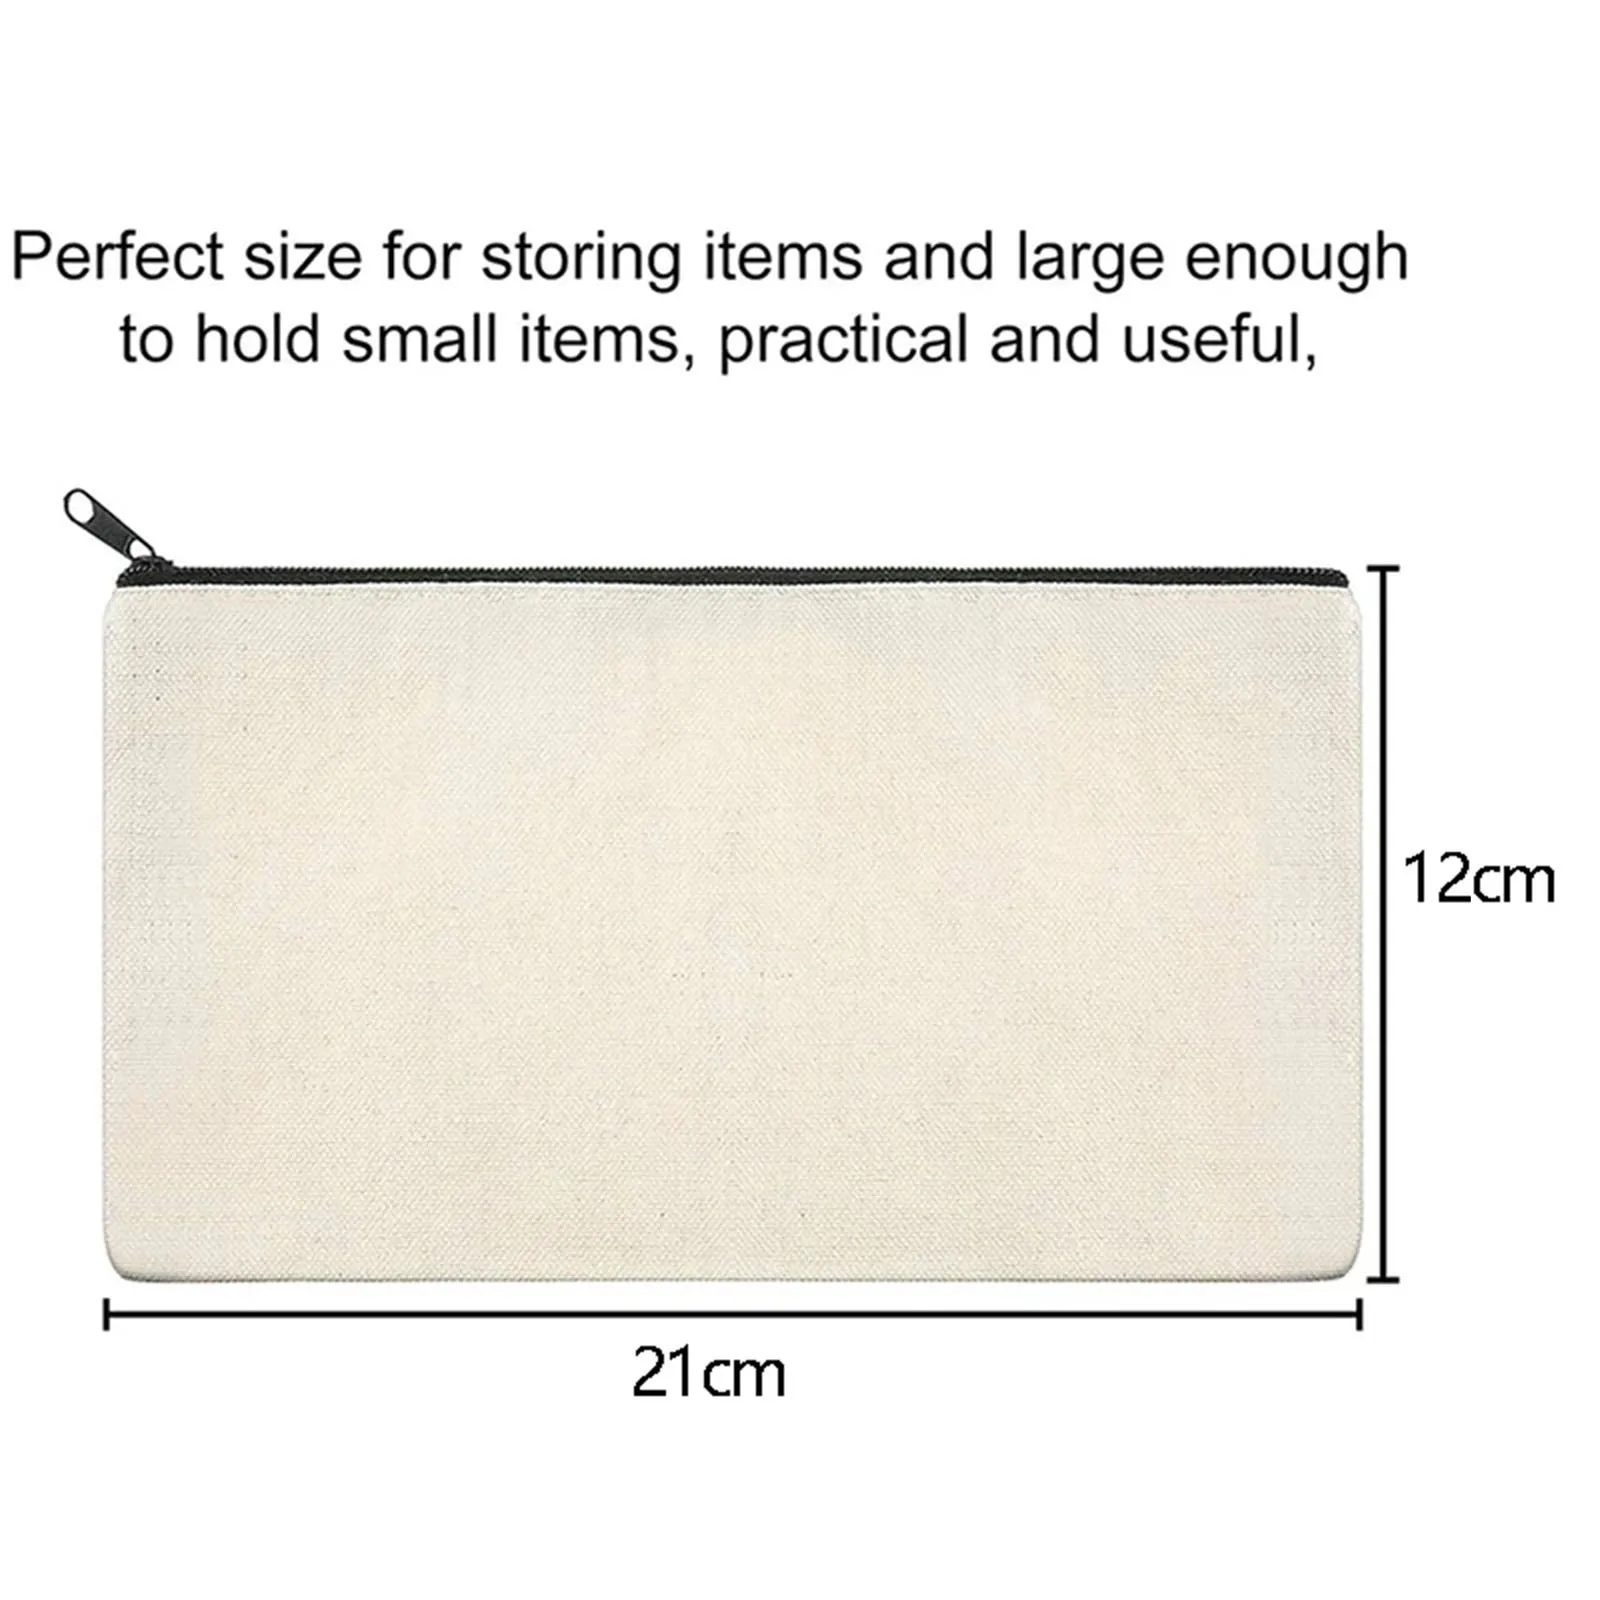 10x Blank DIY Craft Bag Canvas Pen Case Blank Makeup Bags Canvas Pencil Bag Canvas Bags With Zipper Diy Bag Project Bags